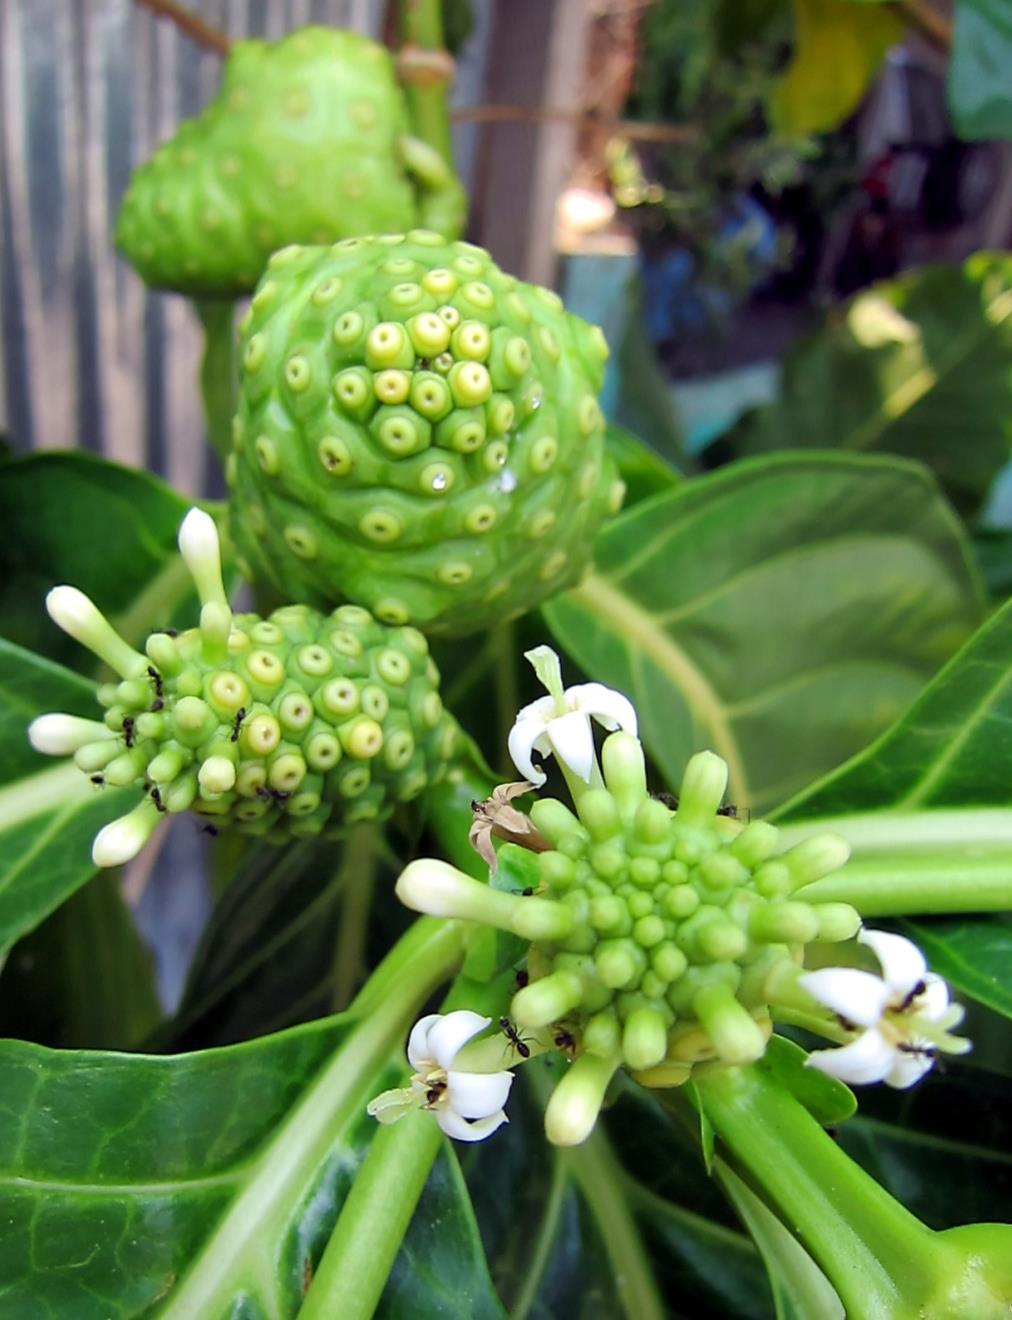 Noni (Morinda citrifolia) produces an interesting fruit that is